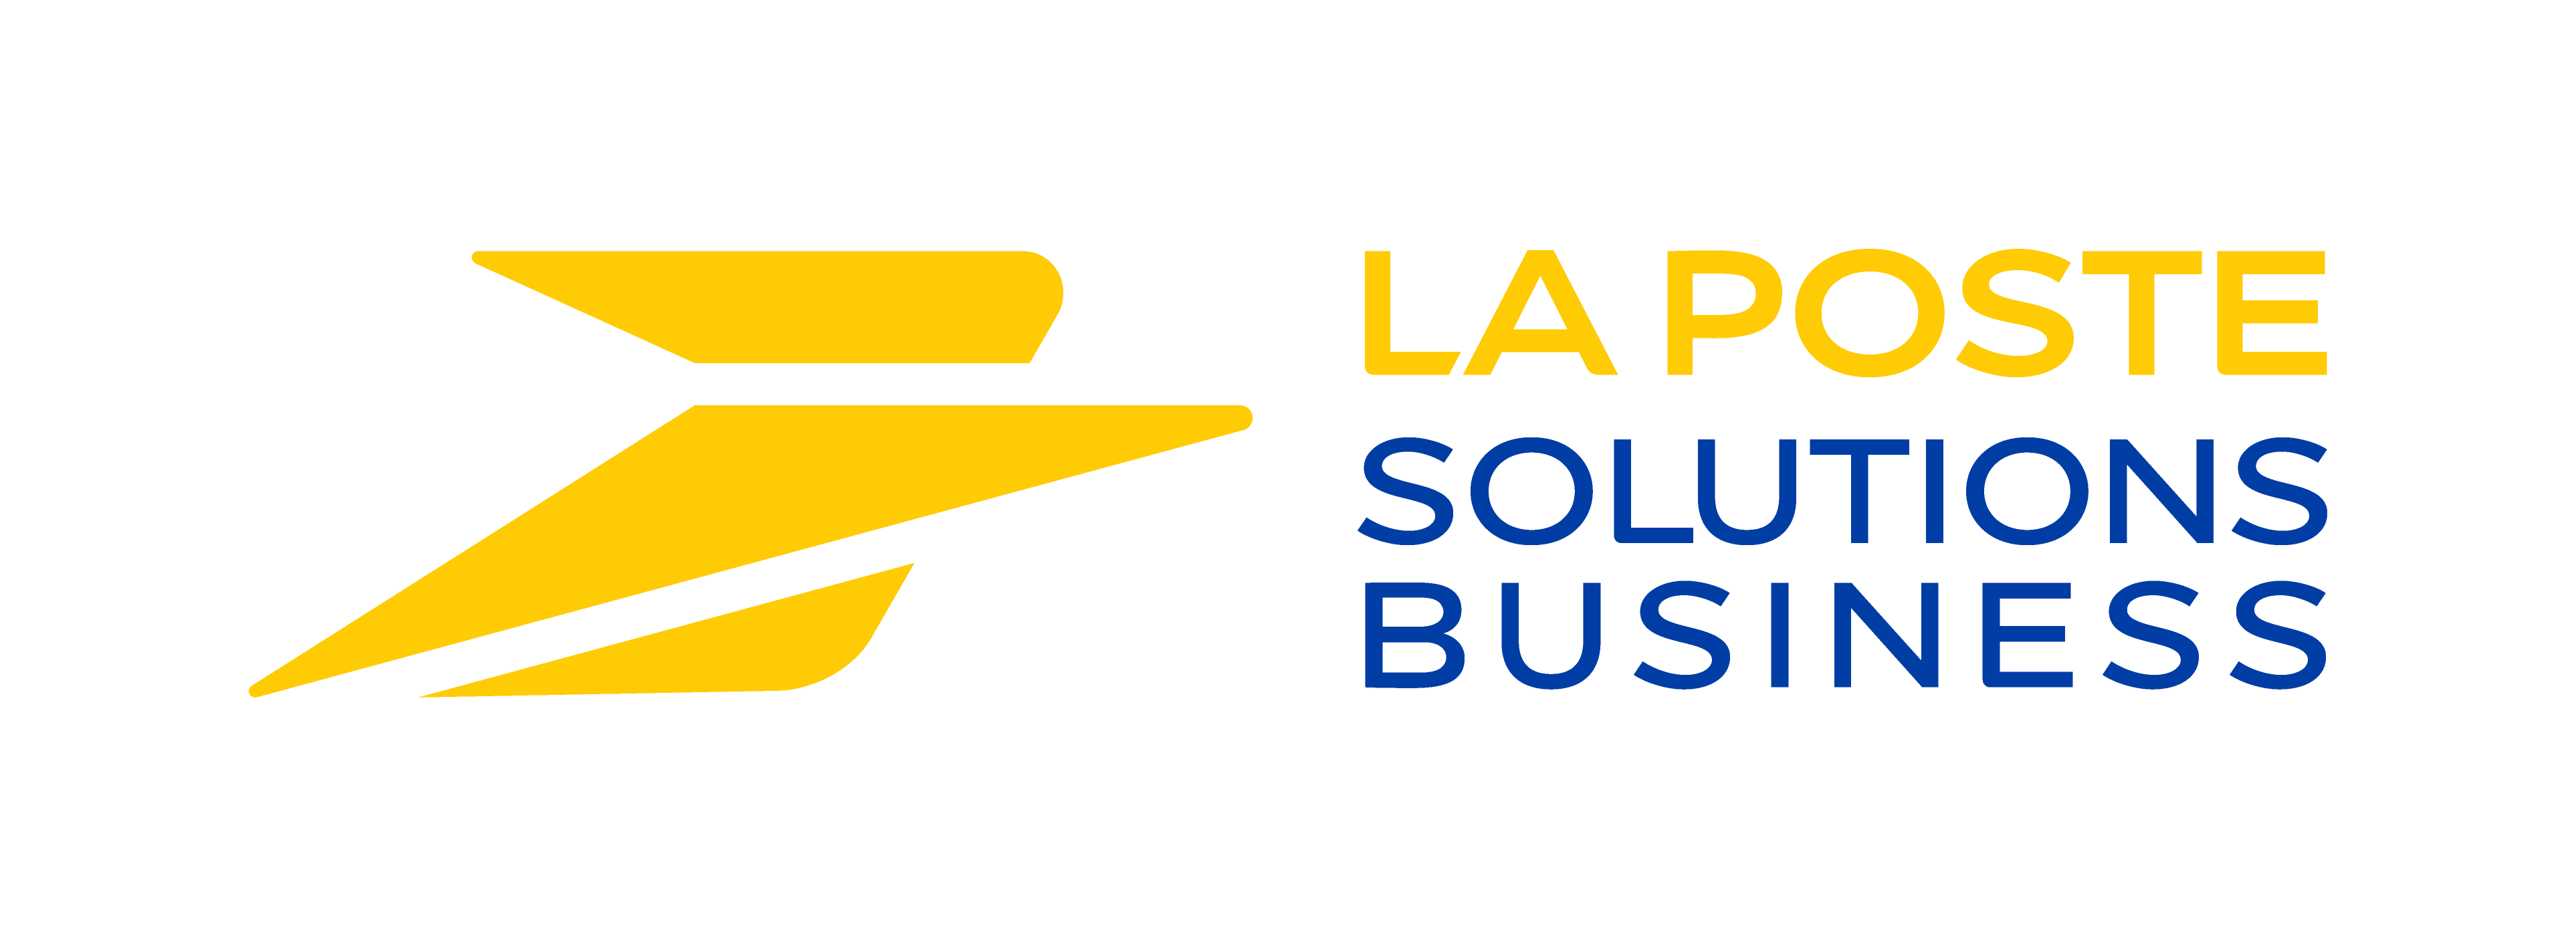 logo laposte solutions business